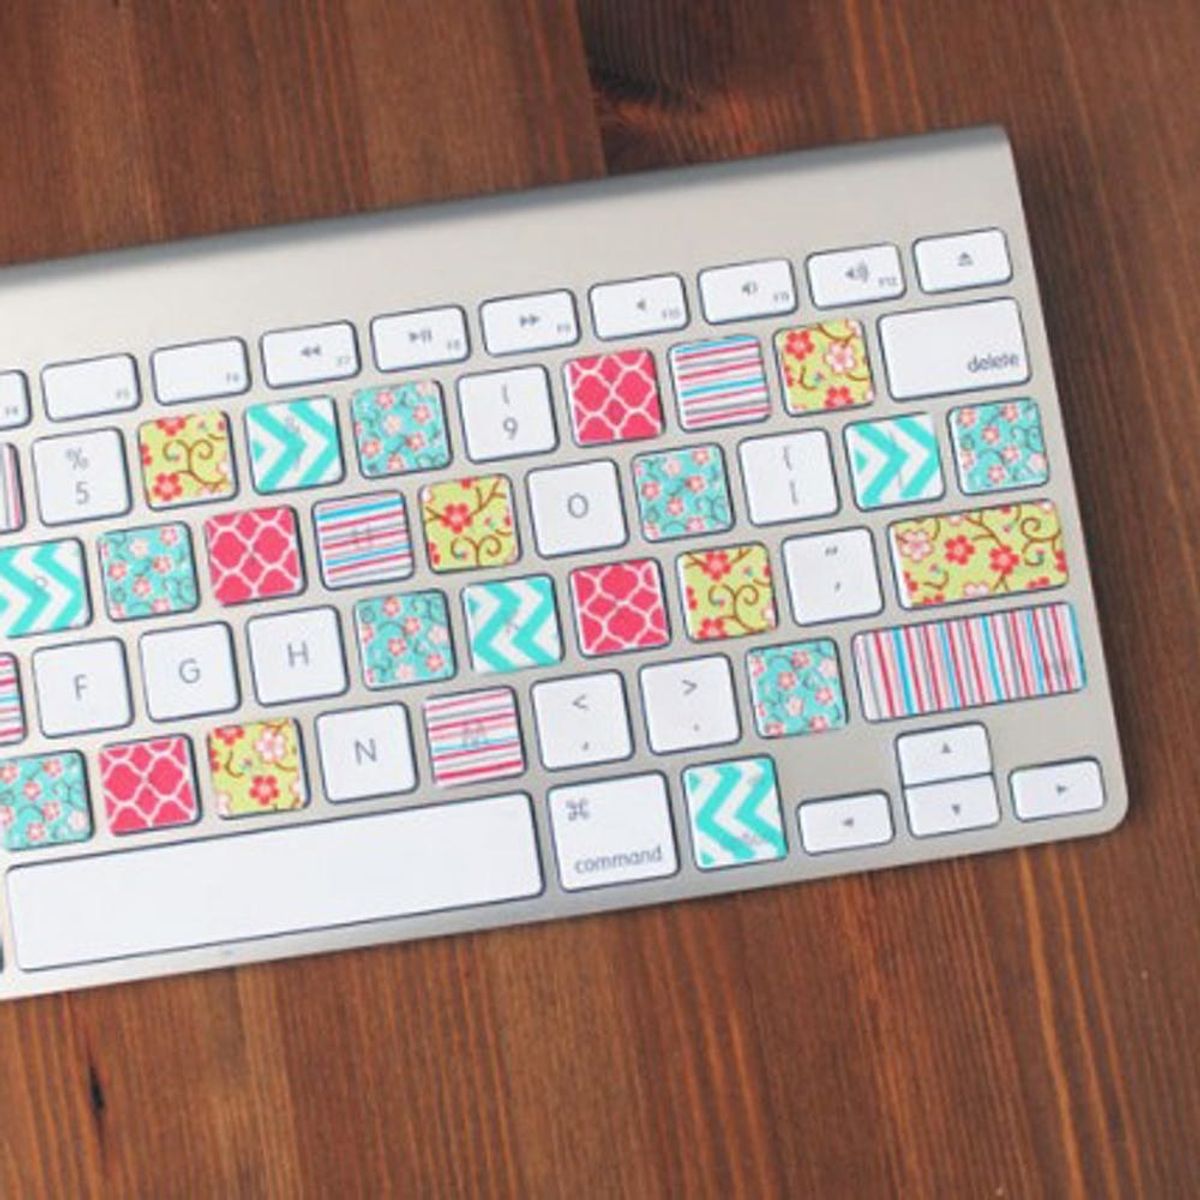 Tech Hack Alert: 32 Keyboard Shortcuts for Navigating Facebook